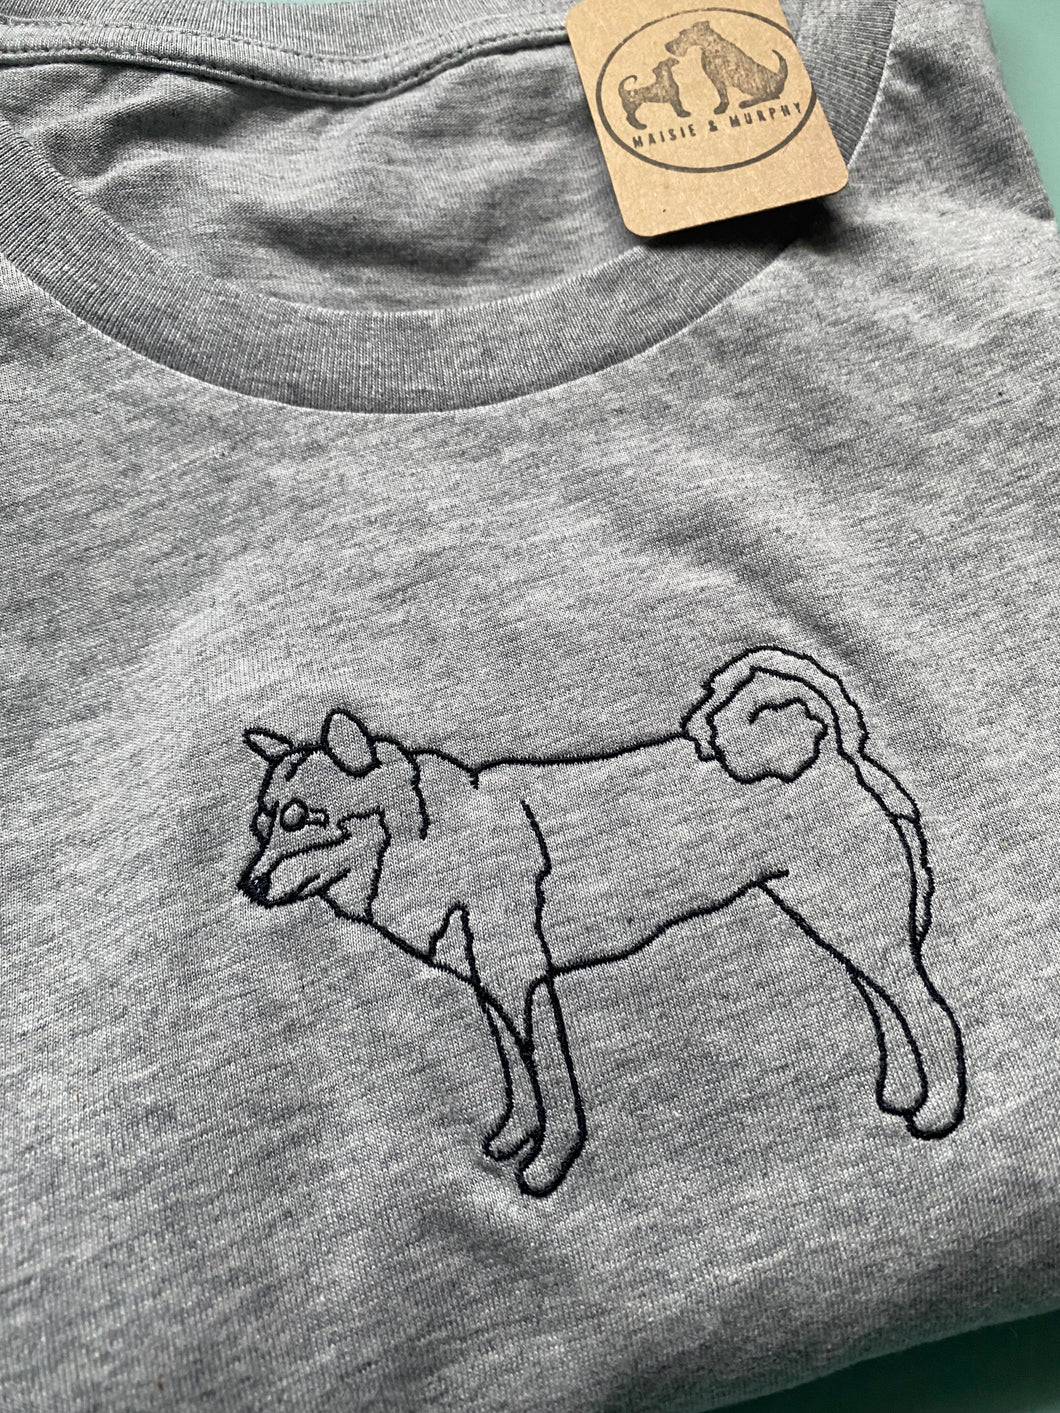 Shiba Inu Silhouette Sweatshirt- Gifts for Shiba Inu lovers and owners